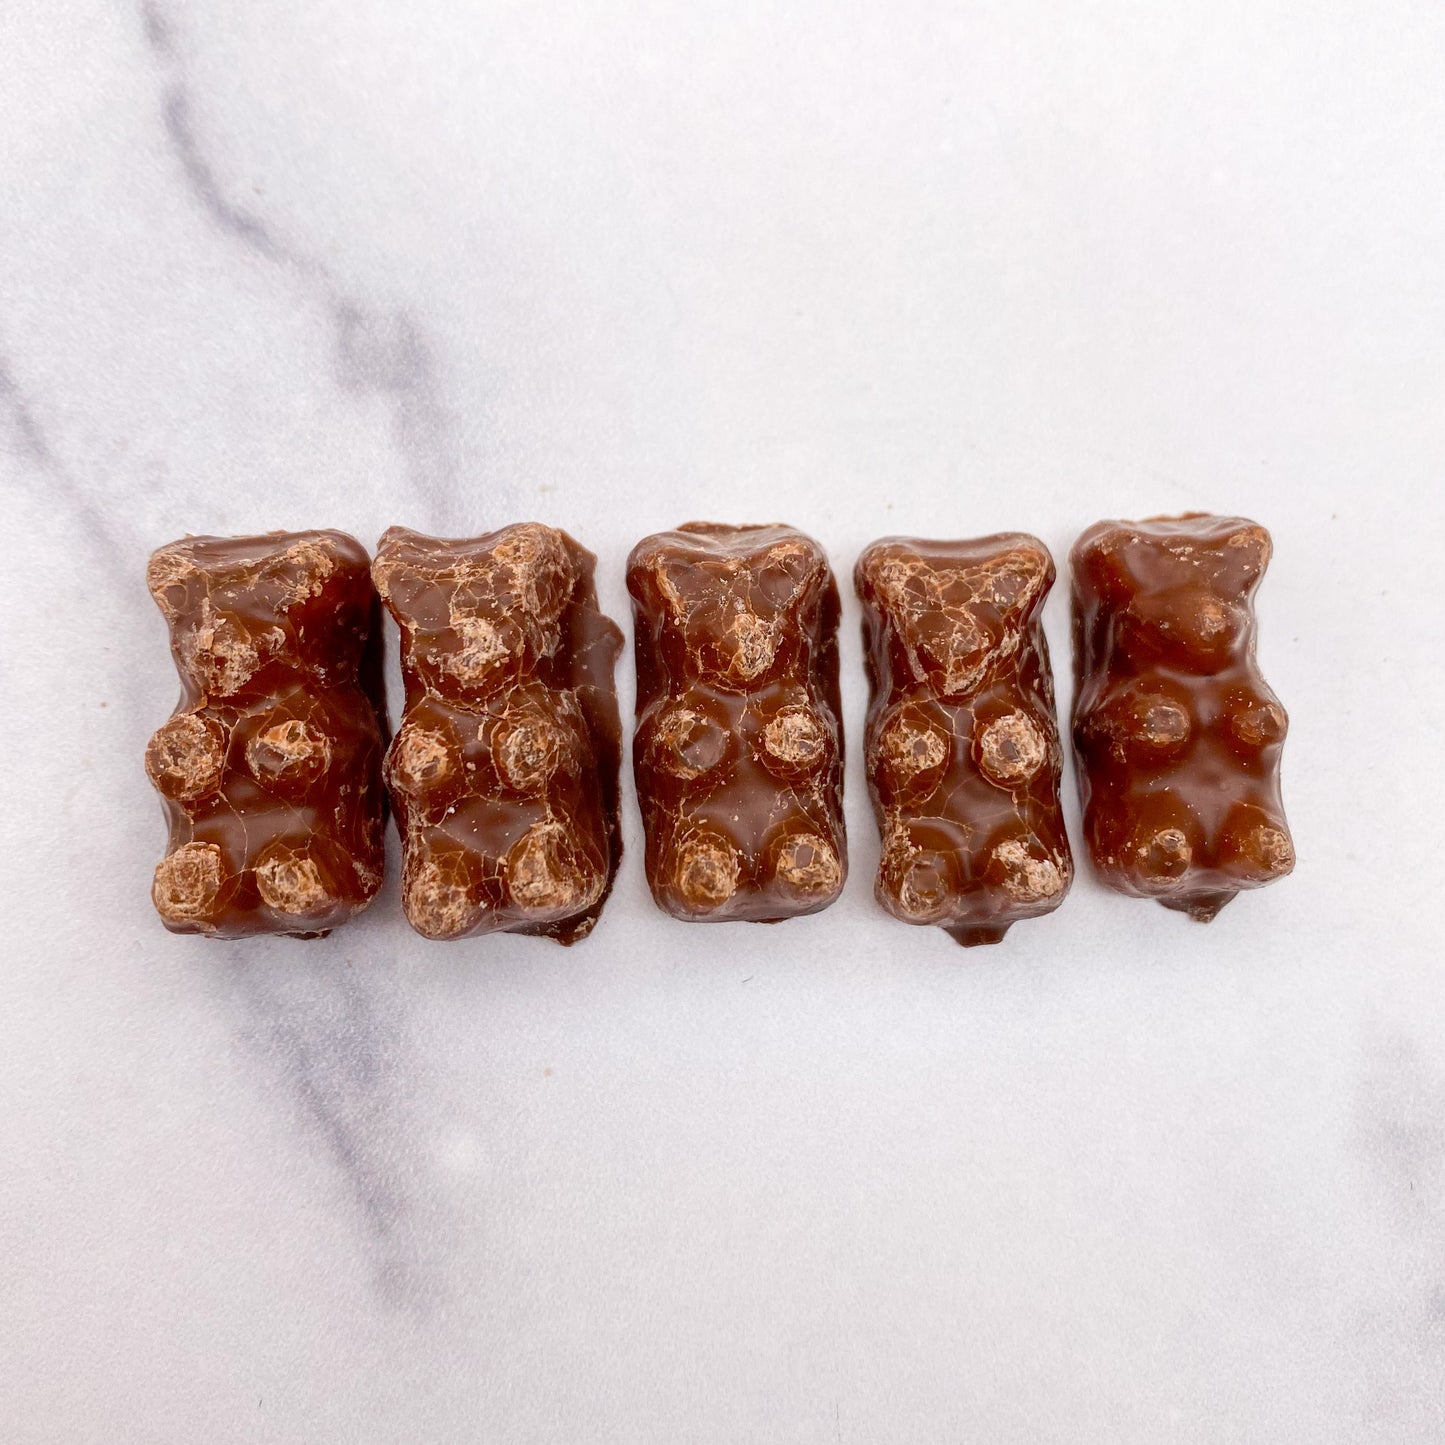 Gummi Bears - Chocolate Covered